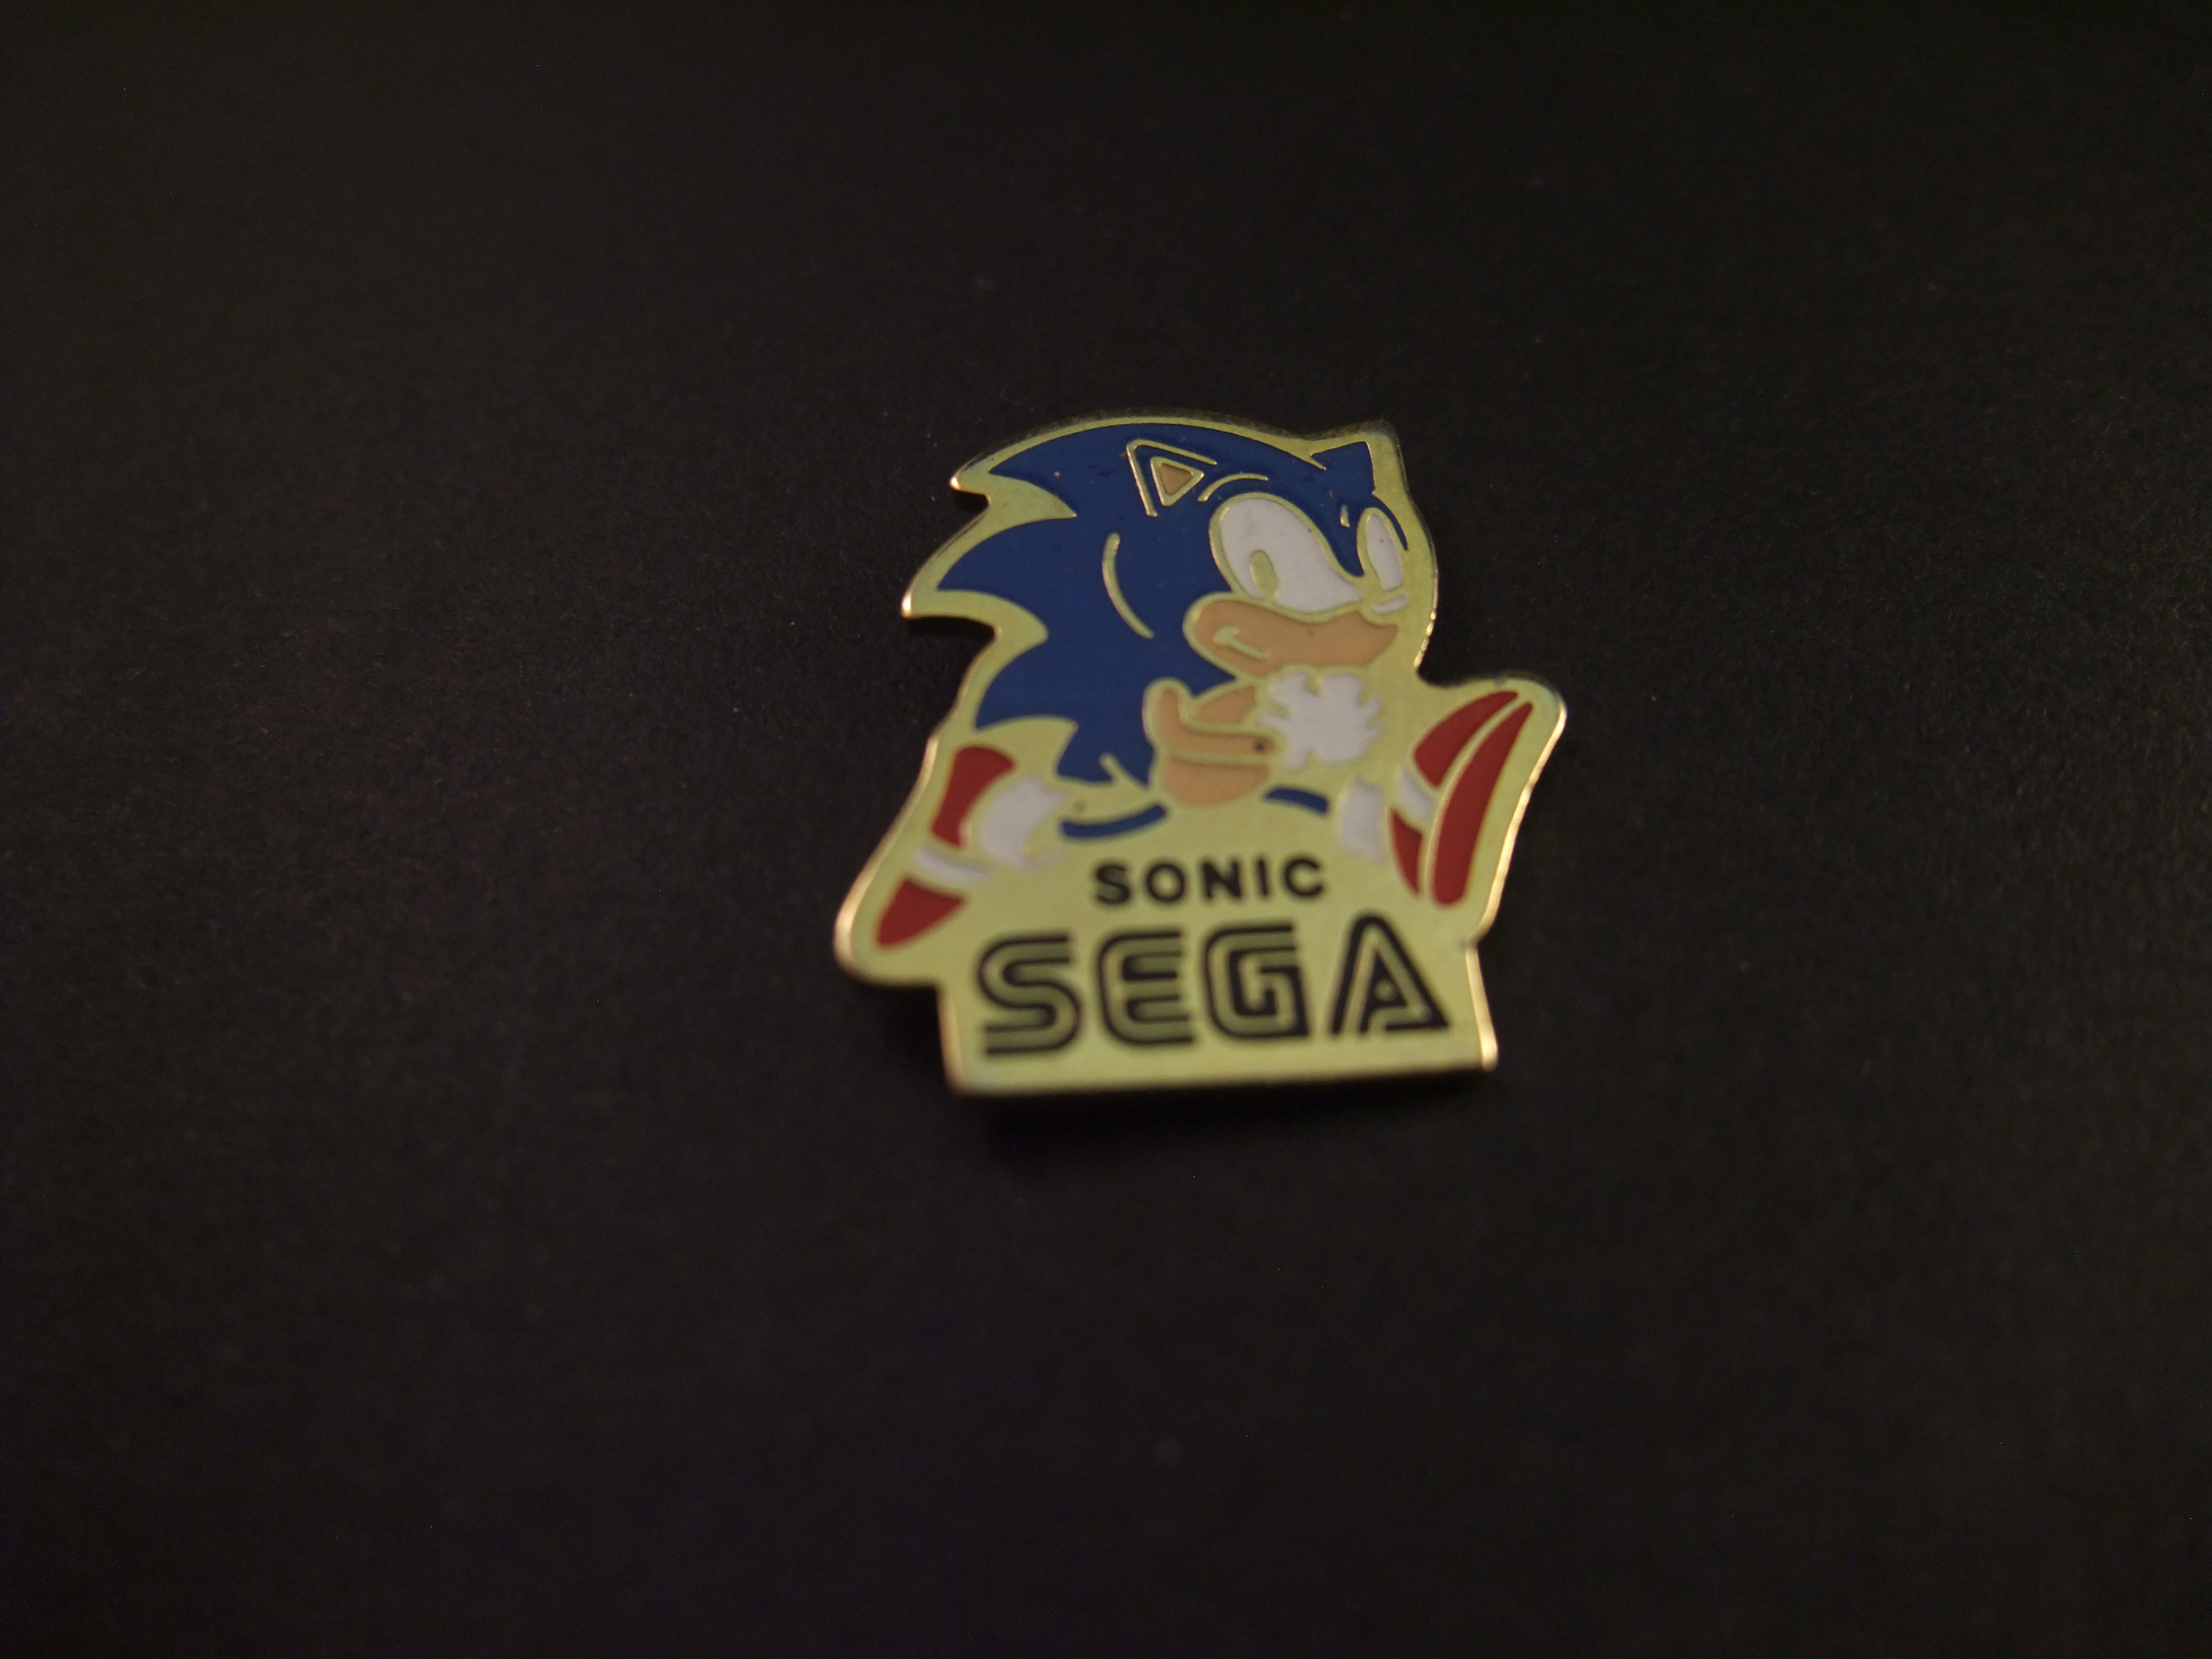 Sonic Sega computerspel (Sonic the Hedgehog )